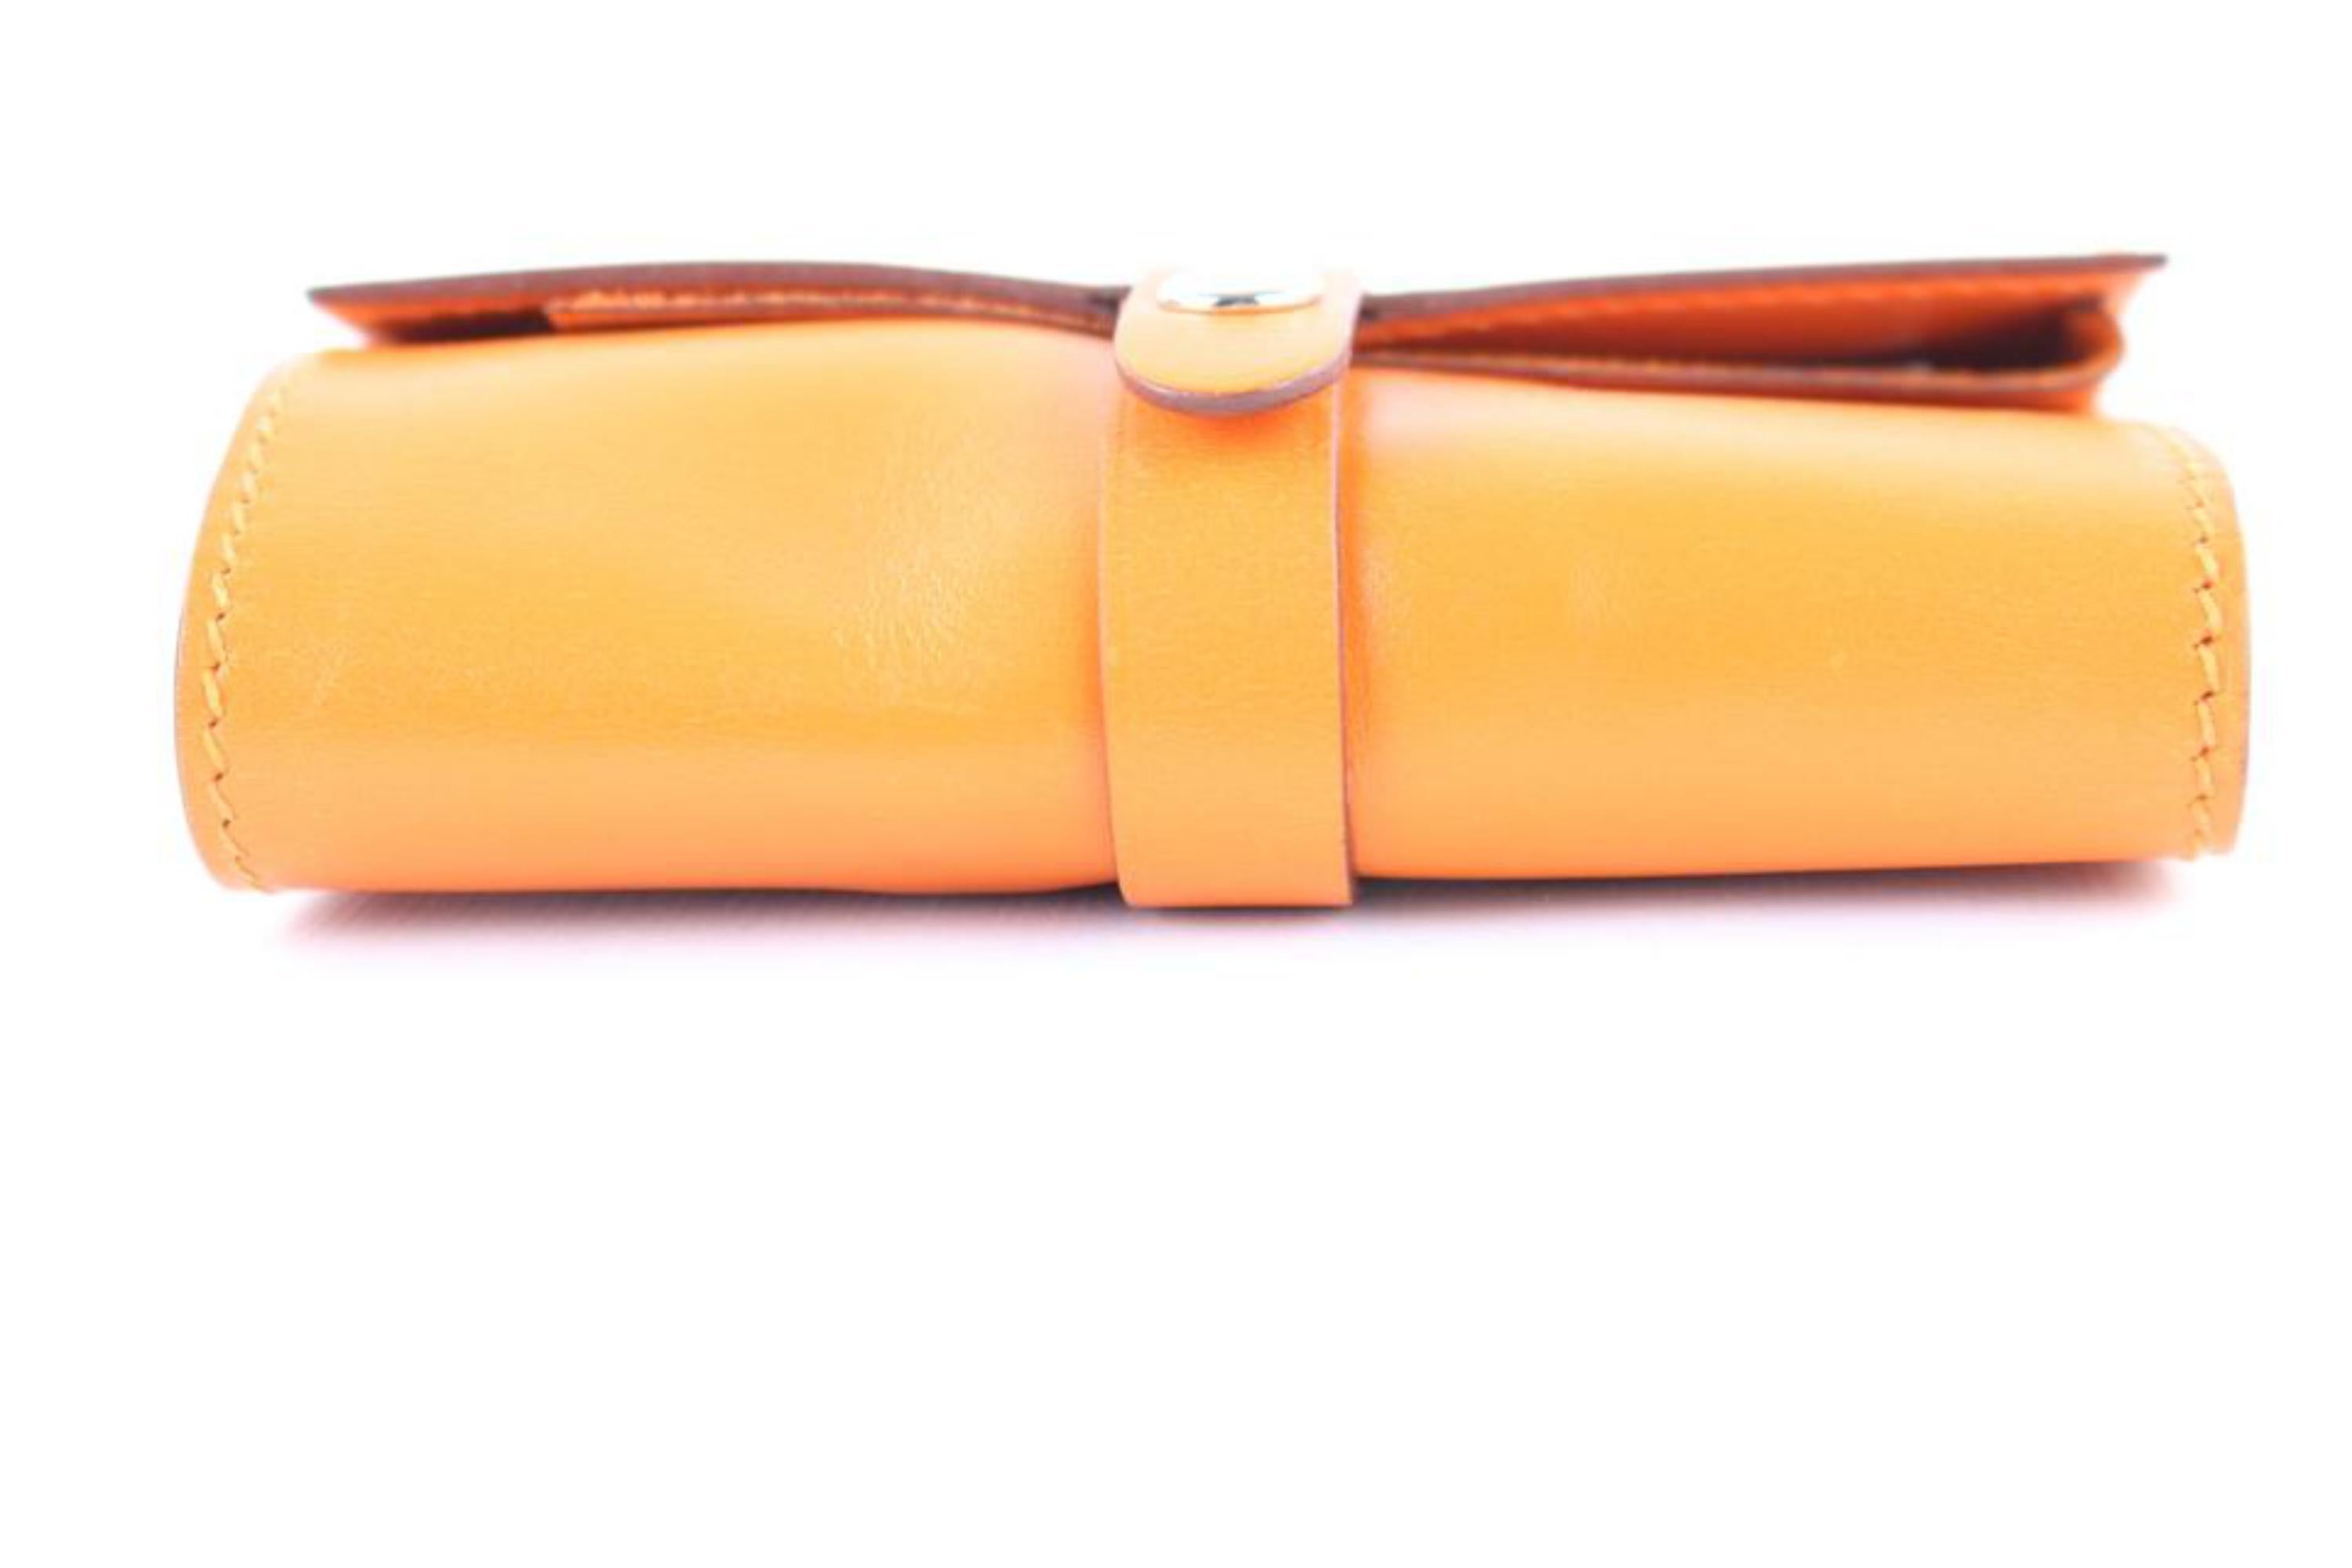 Hermès Nail Care Set 2hr1227 Orange Leather Clutch For Sale 1